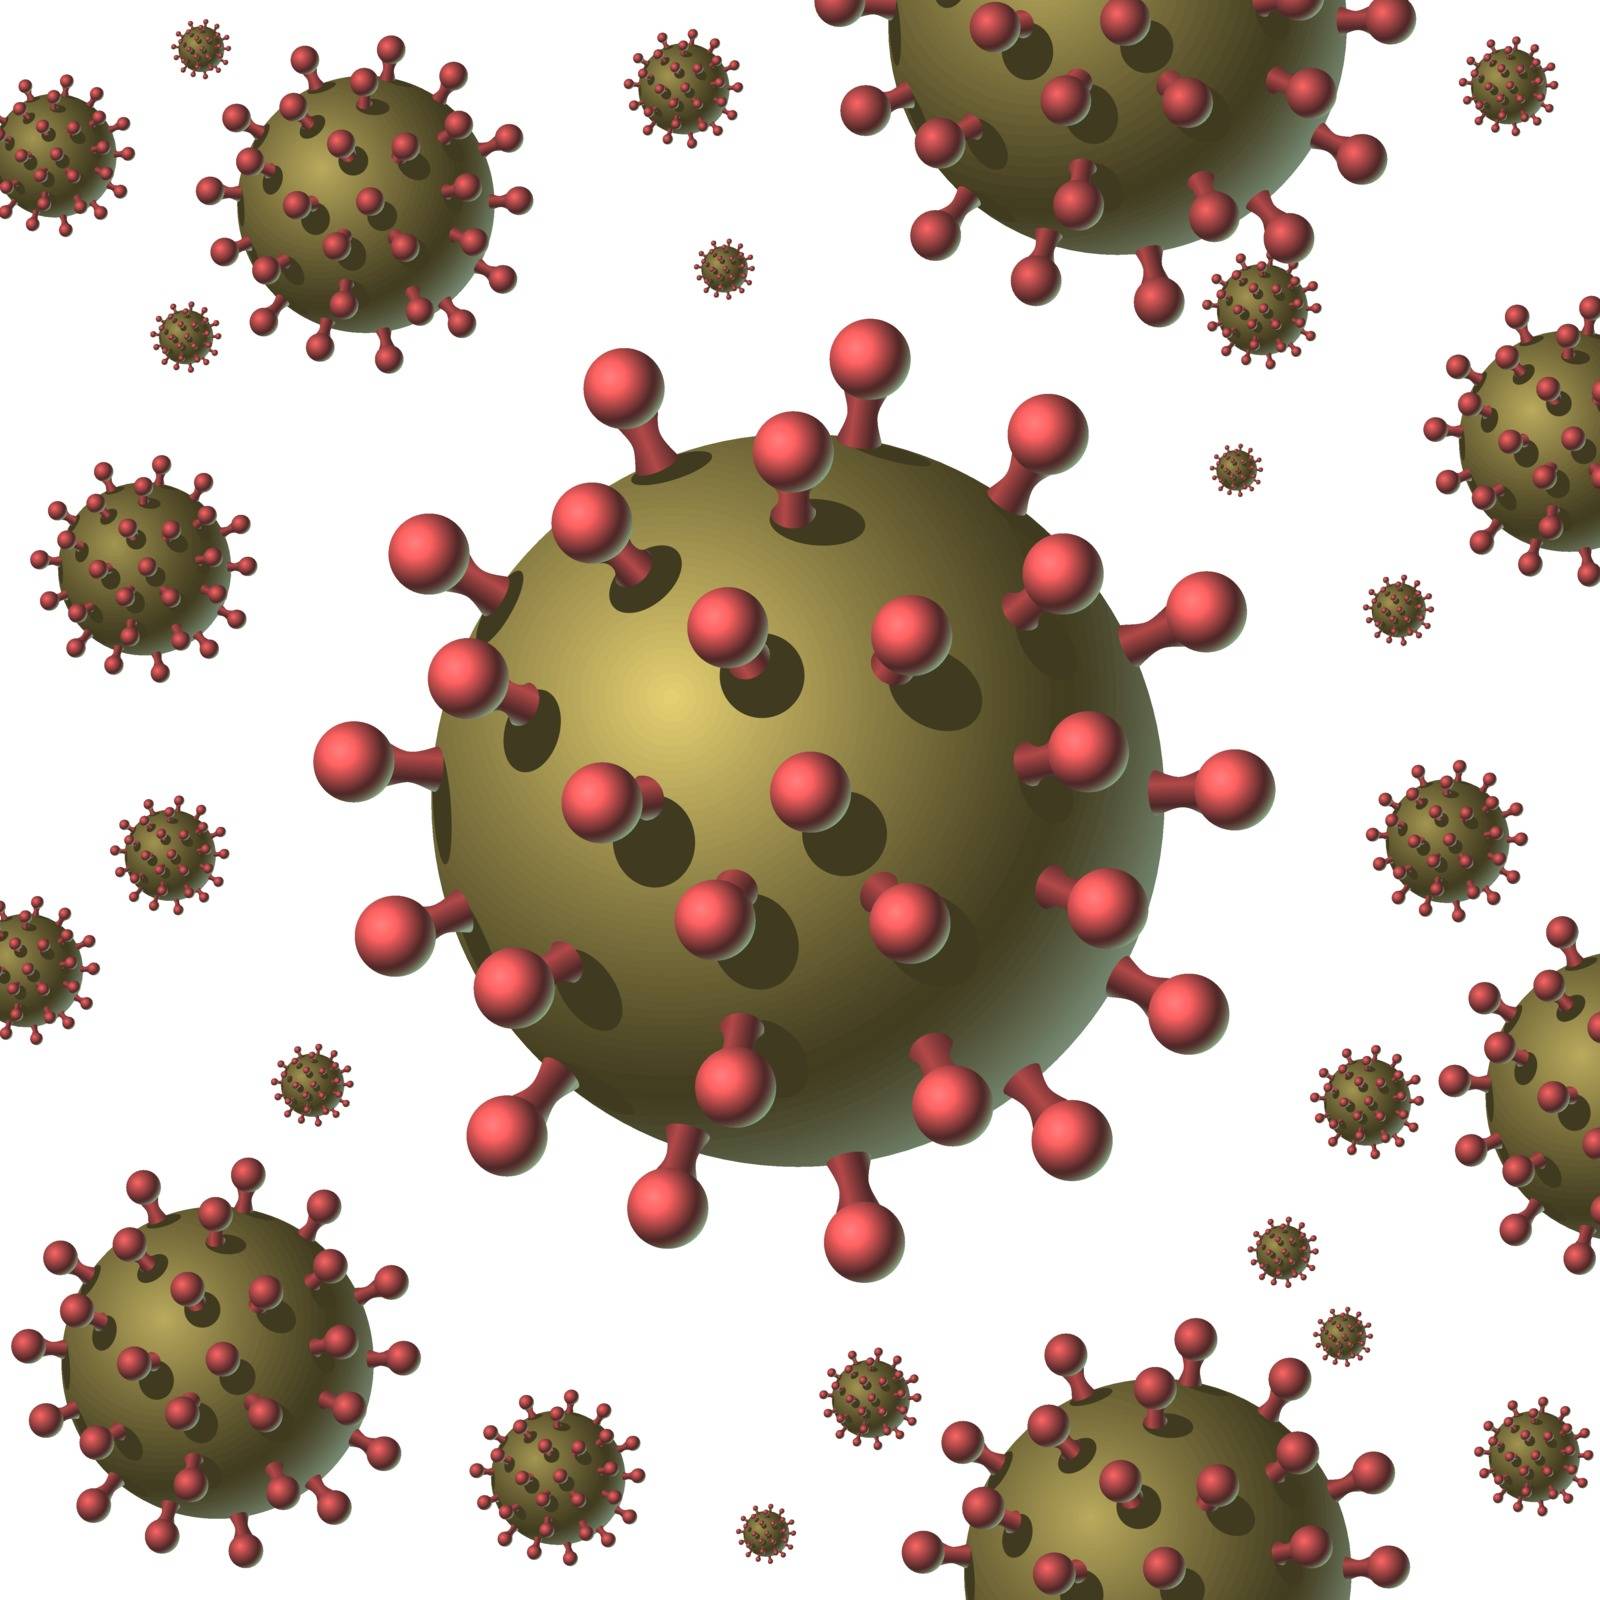 Coronavirus COVID-2019, isolated vector illustration, close up.